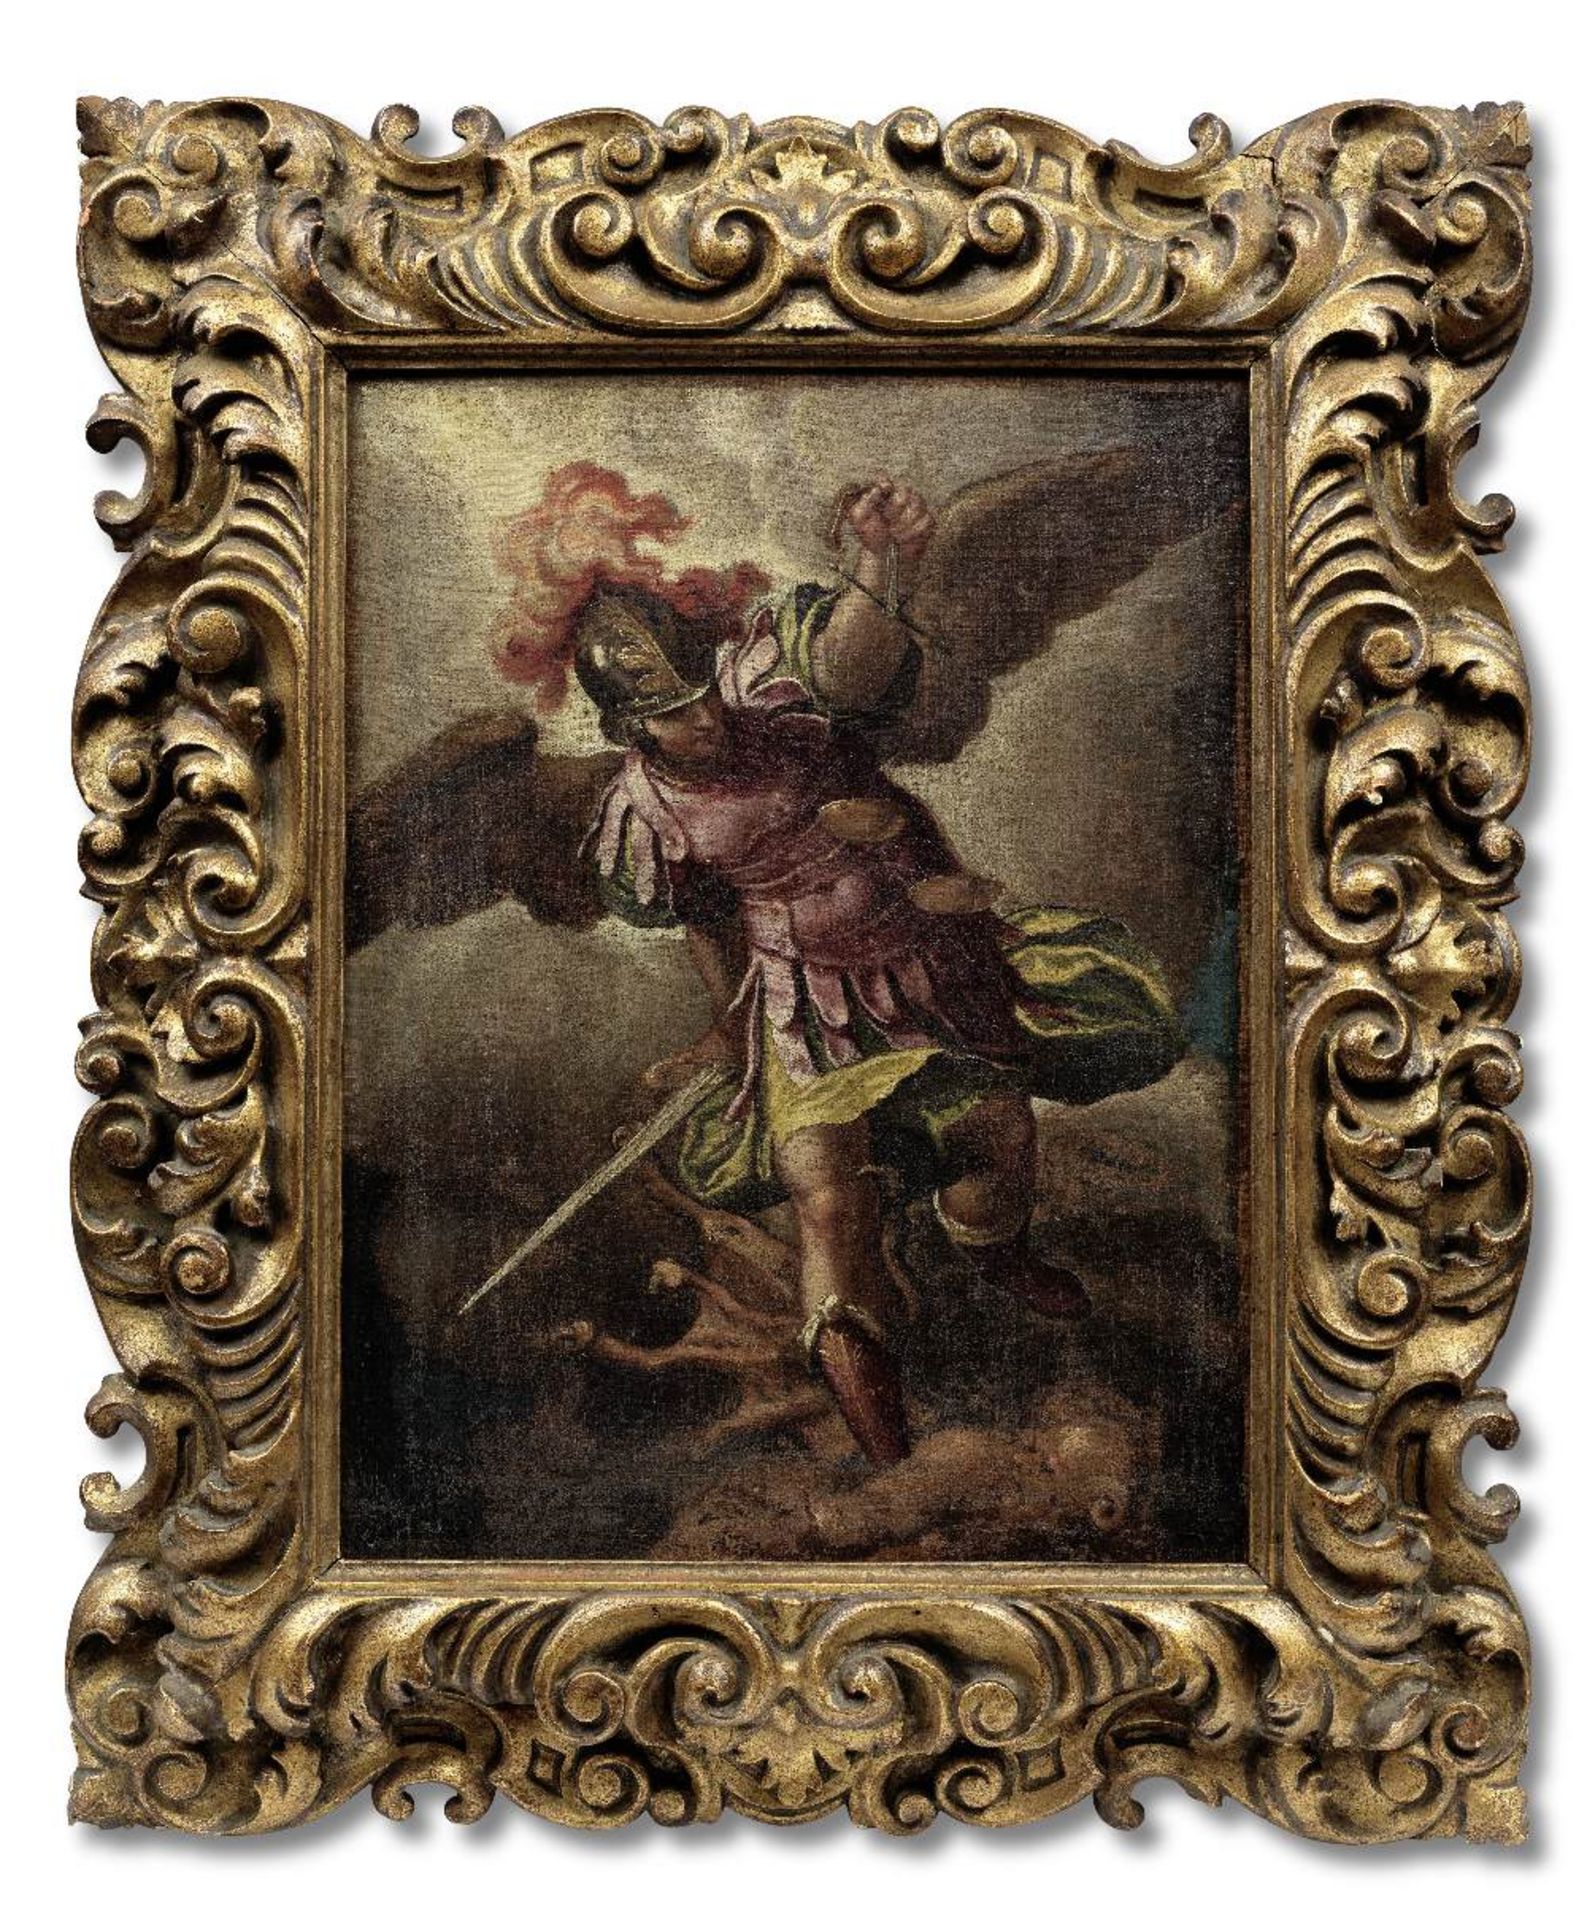 Studio of Paolo Farinati (Verona 1524-1606) Saint Michael in a carved frame